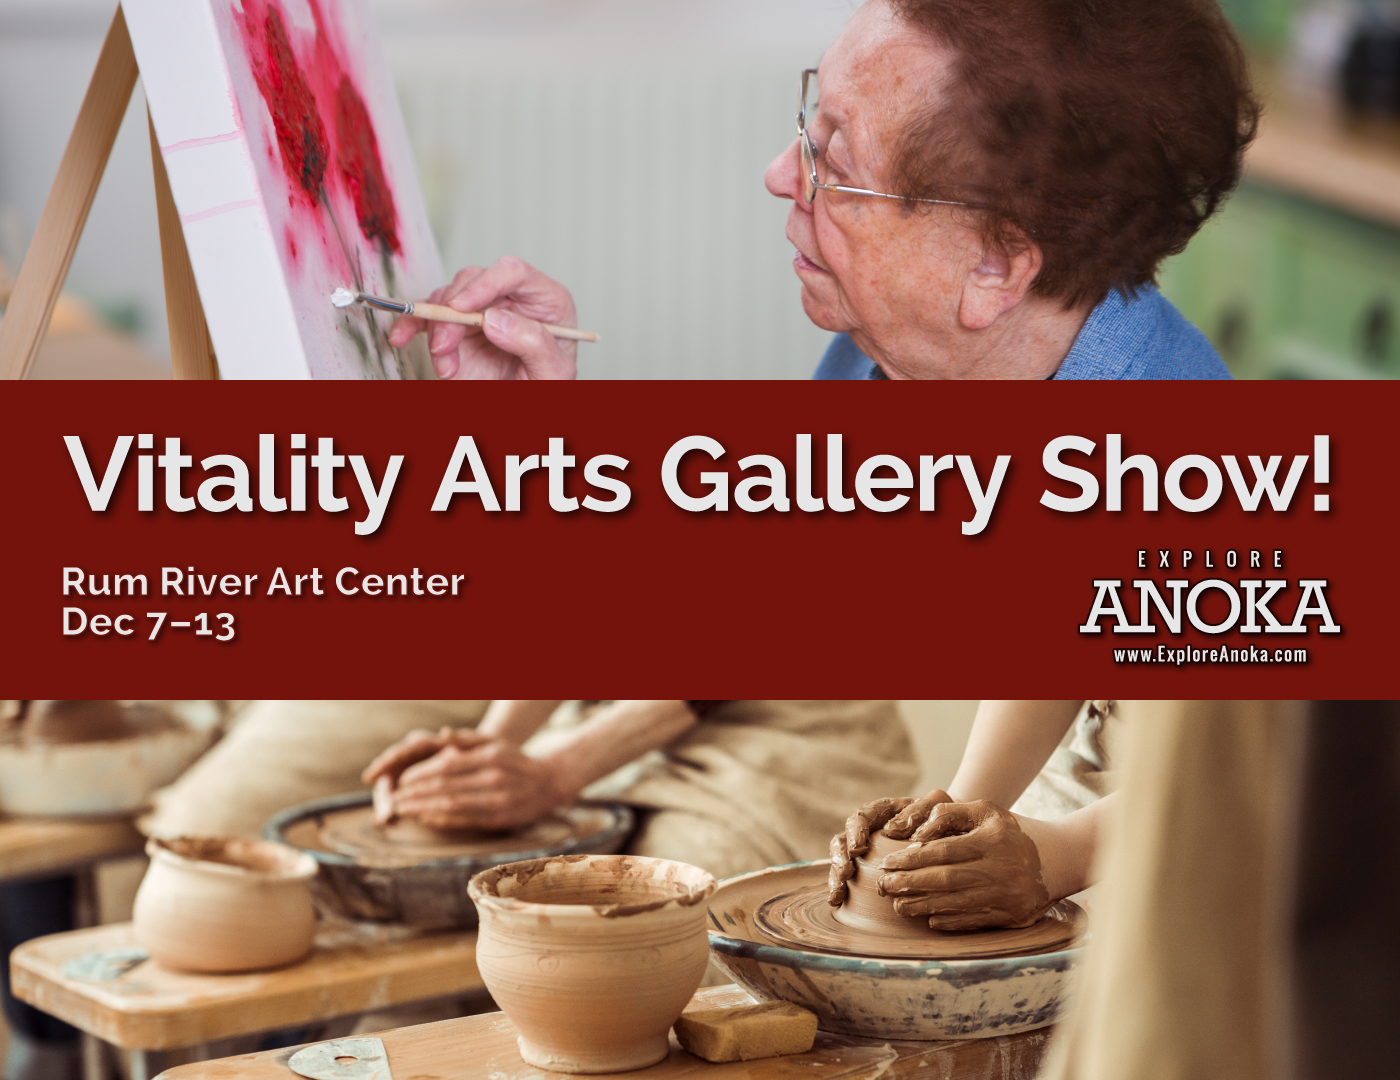 Vitality Arts Gallery Show - Rum River Art Center